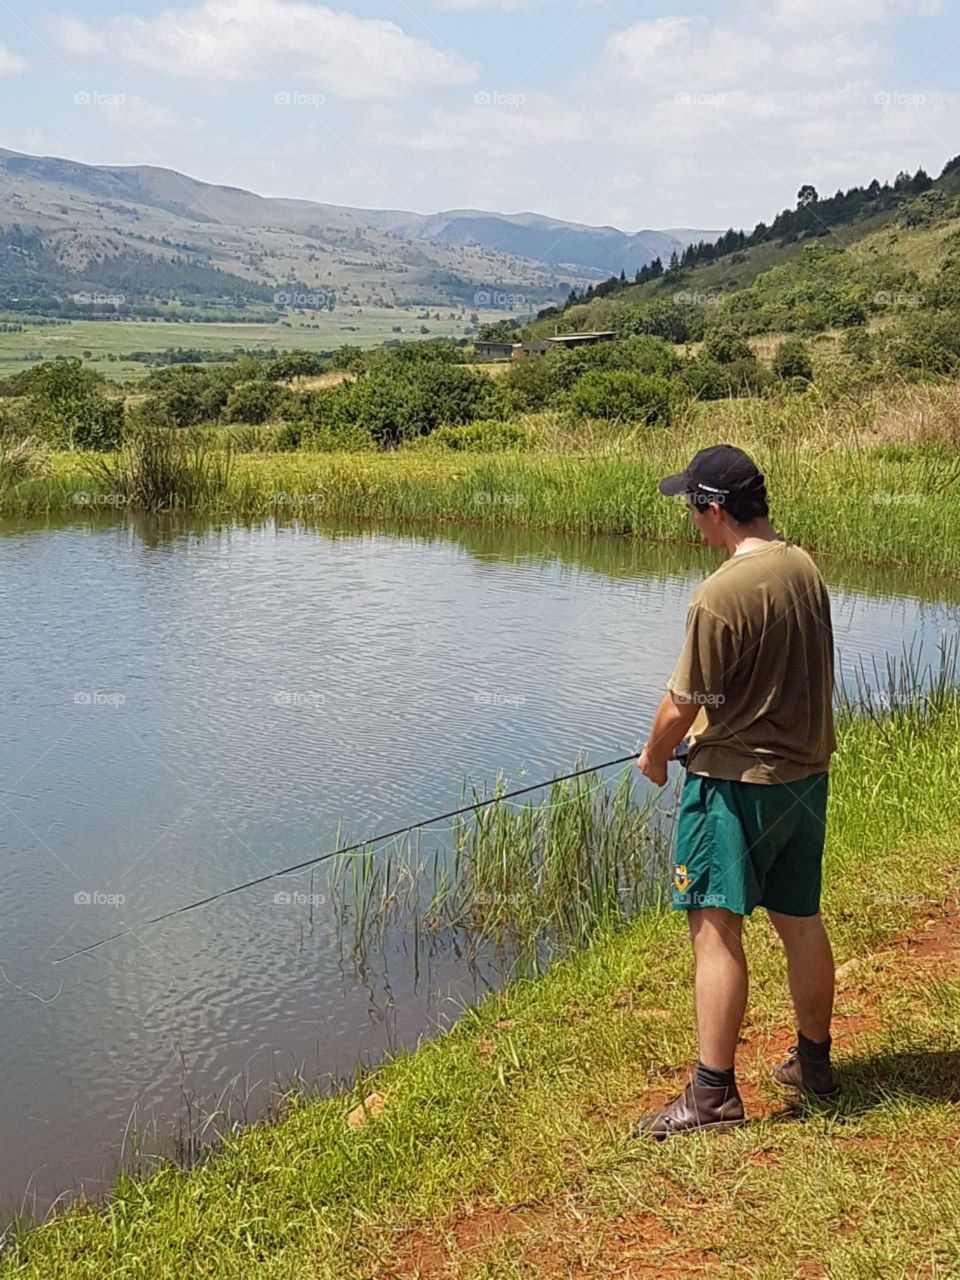 Fly fishing done near Lydenburg, Mpumalanga, South Africa.